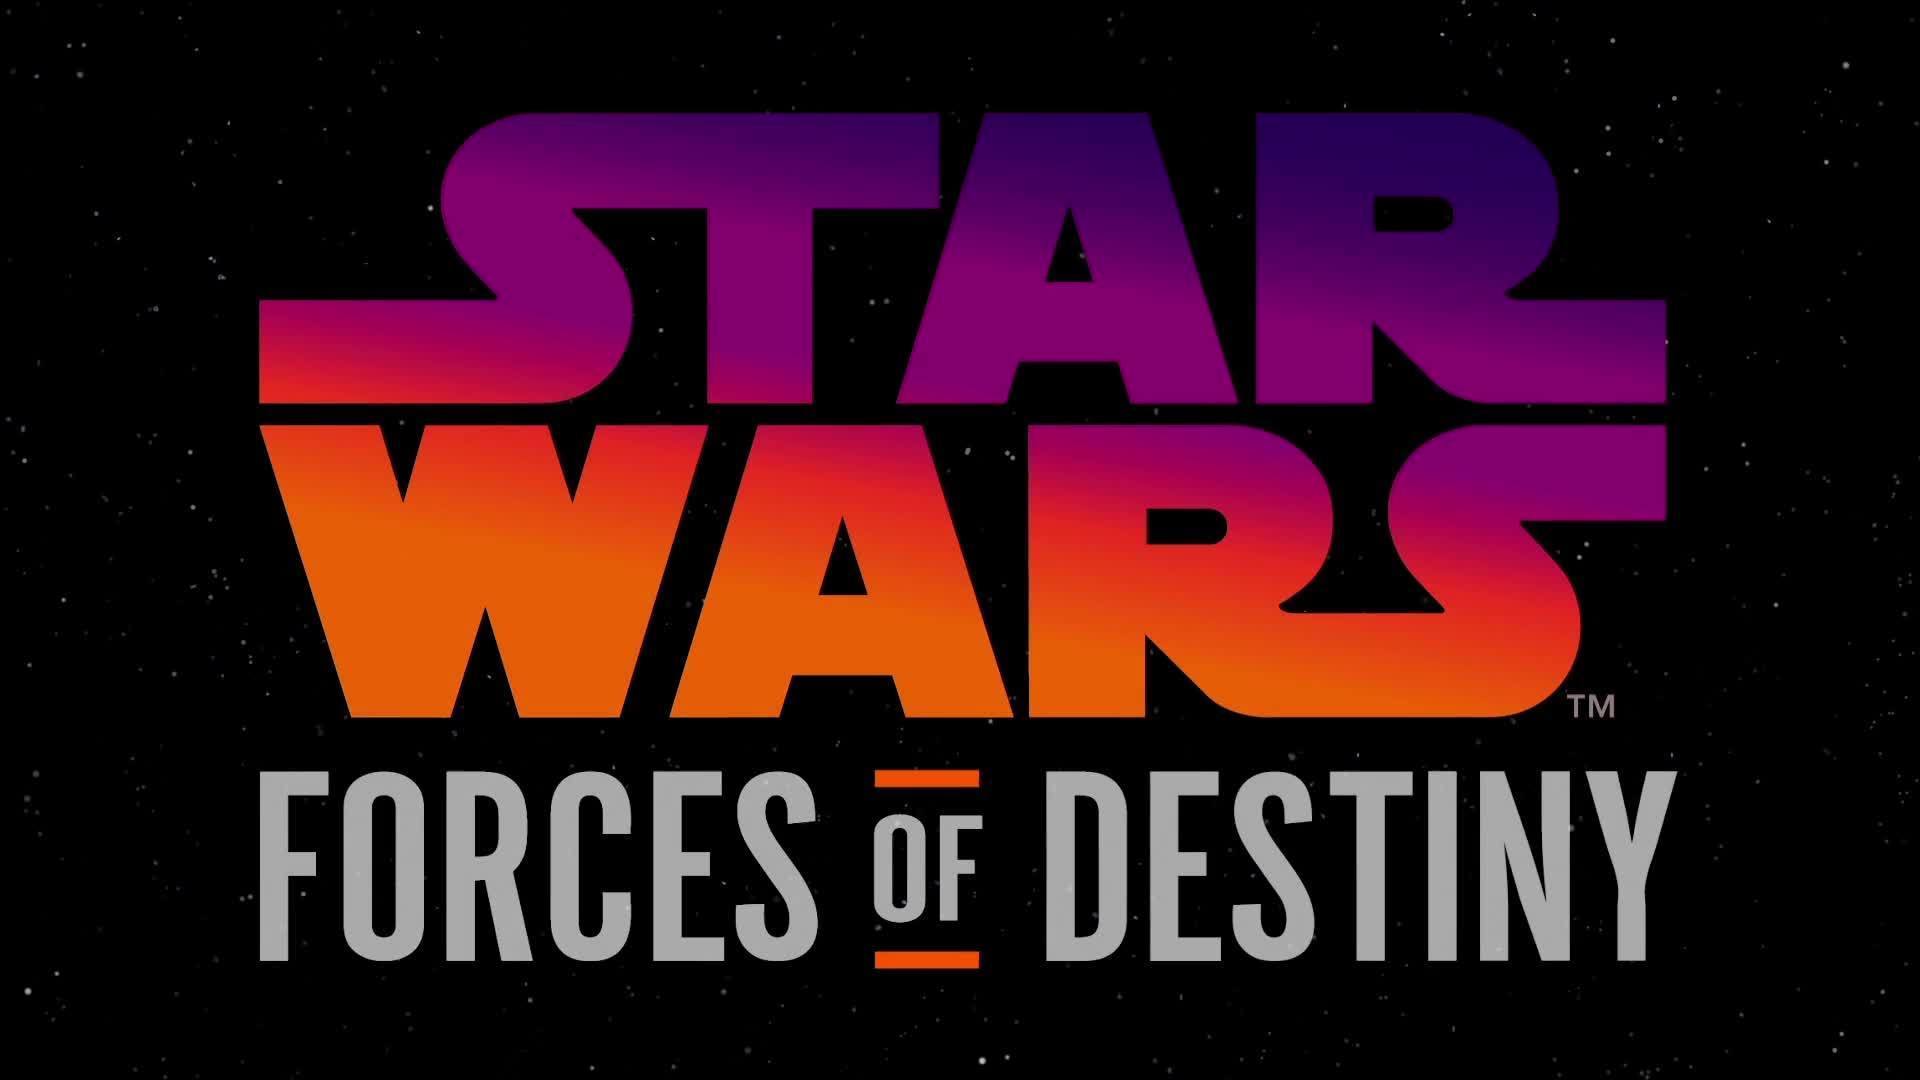 Art History | Star Wars Forces of Destiny | Disney